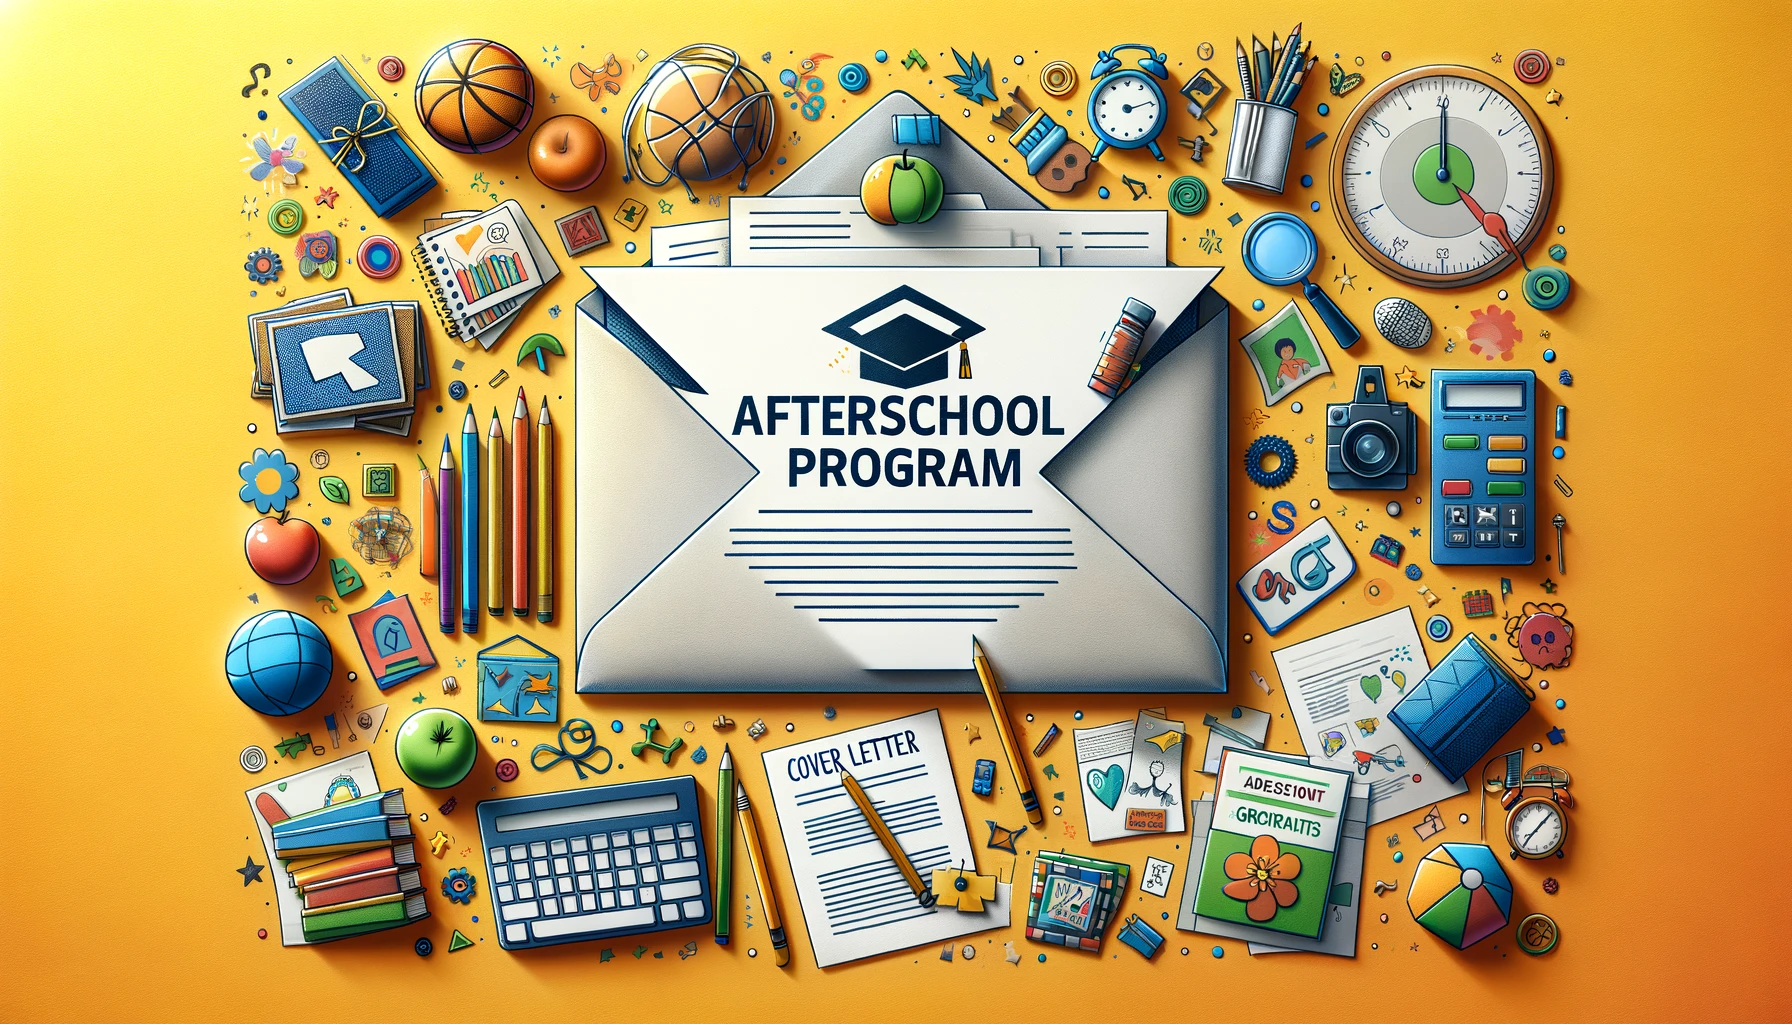 After school program grant proposal cover letter